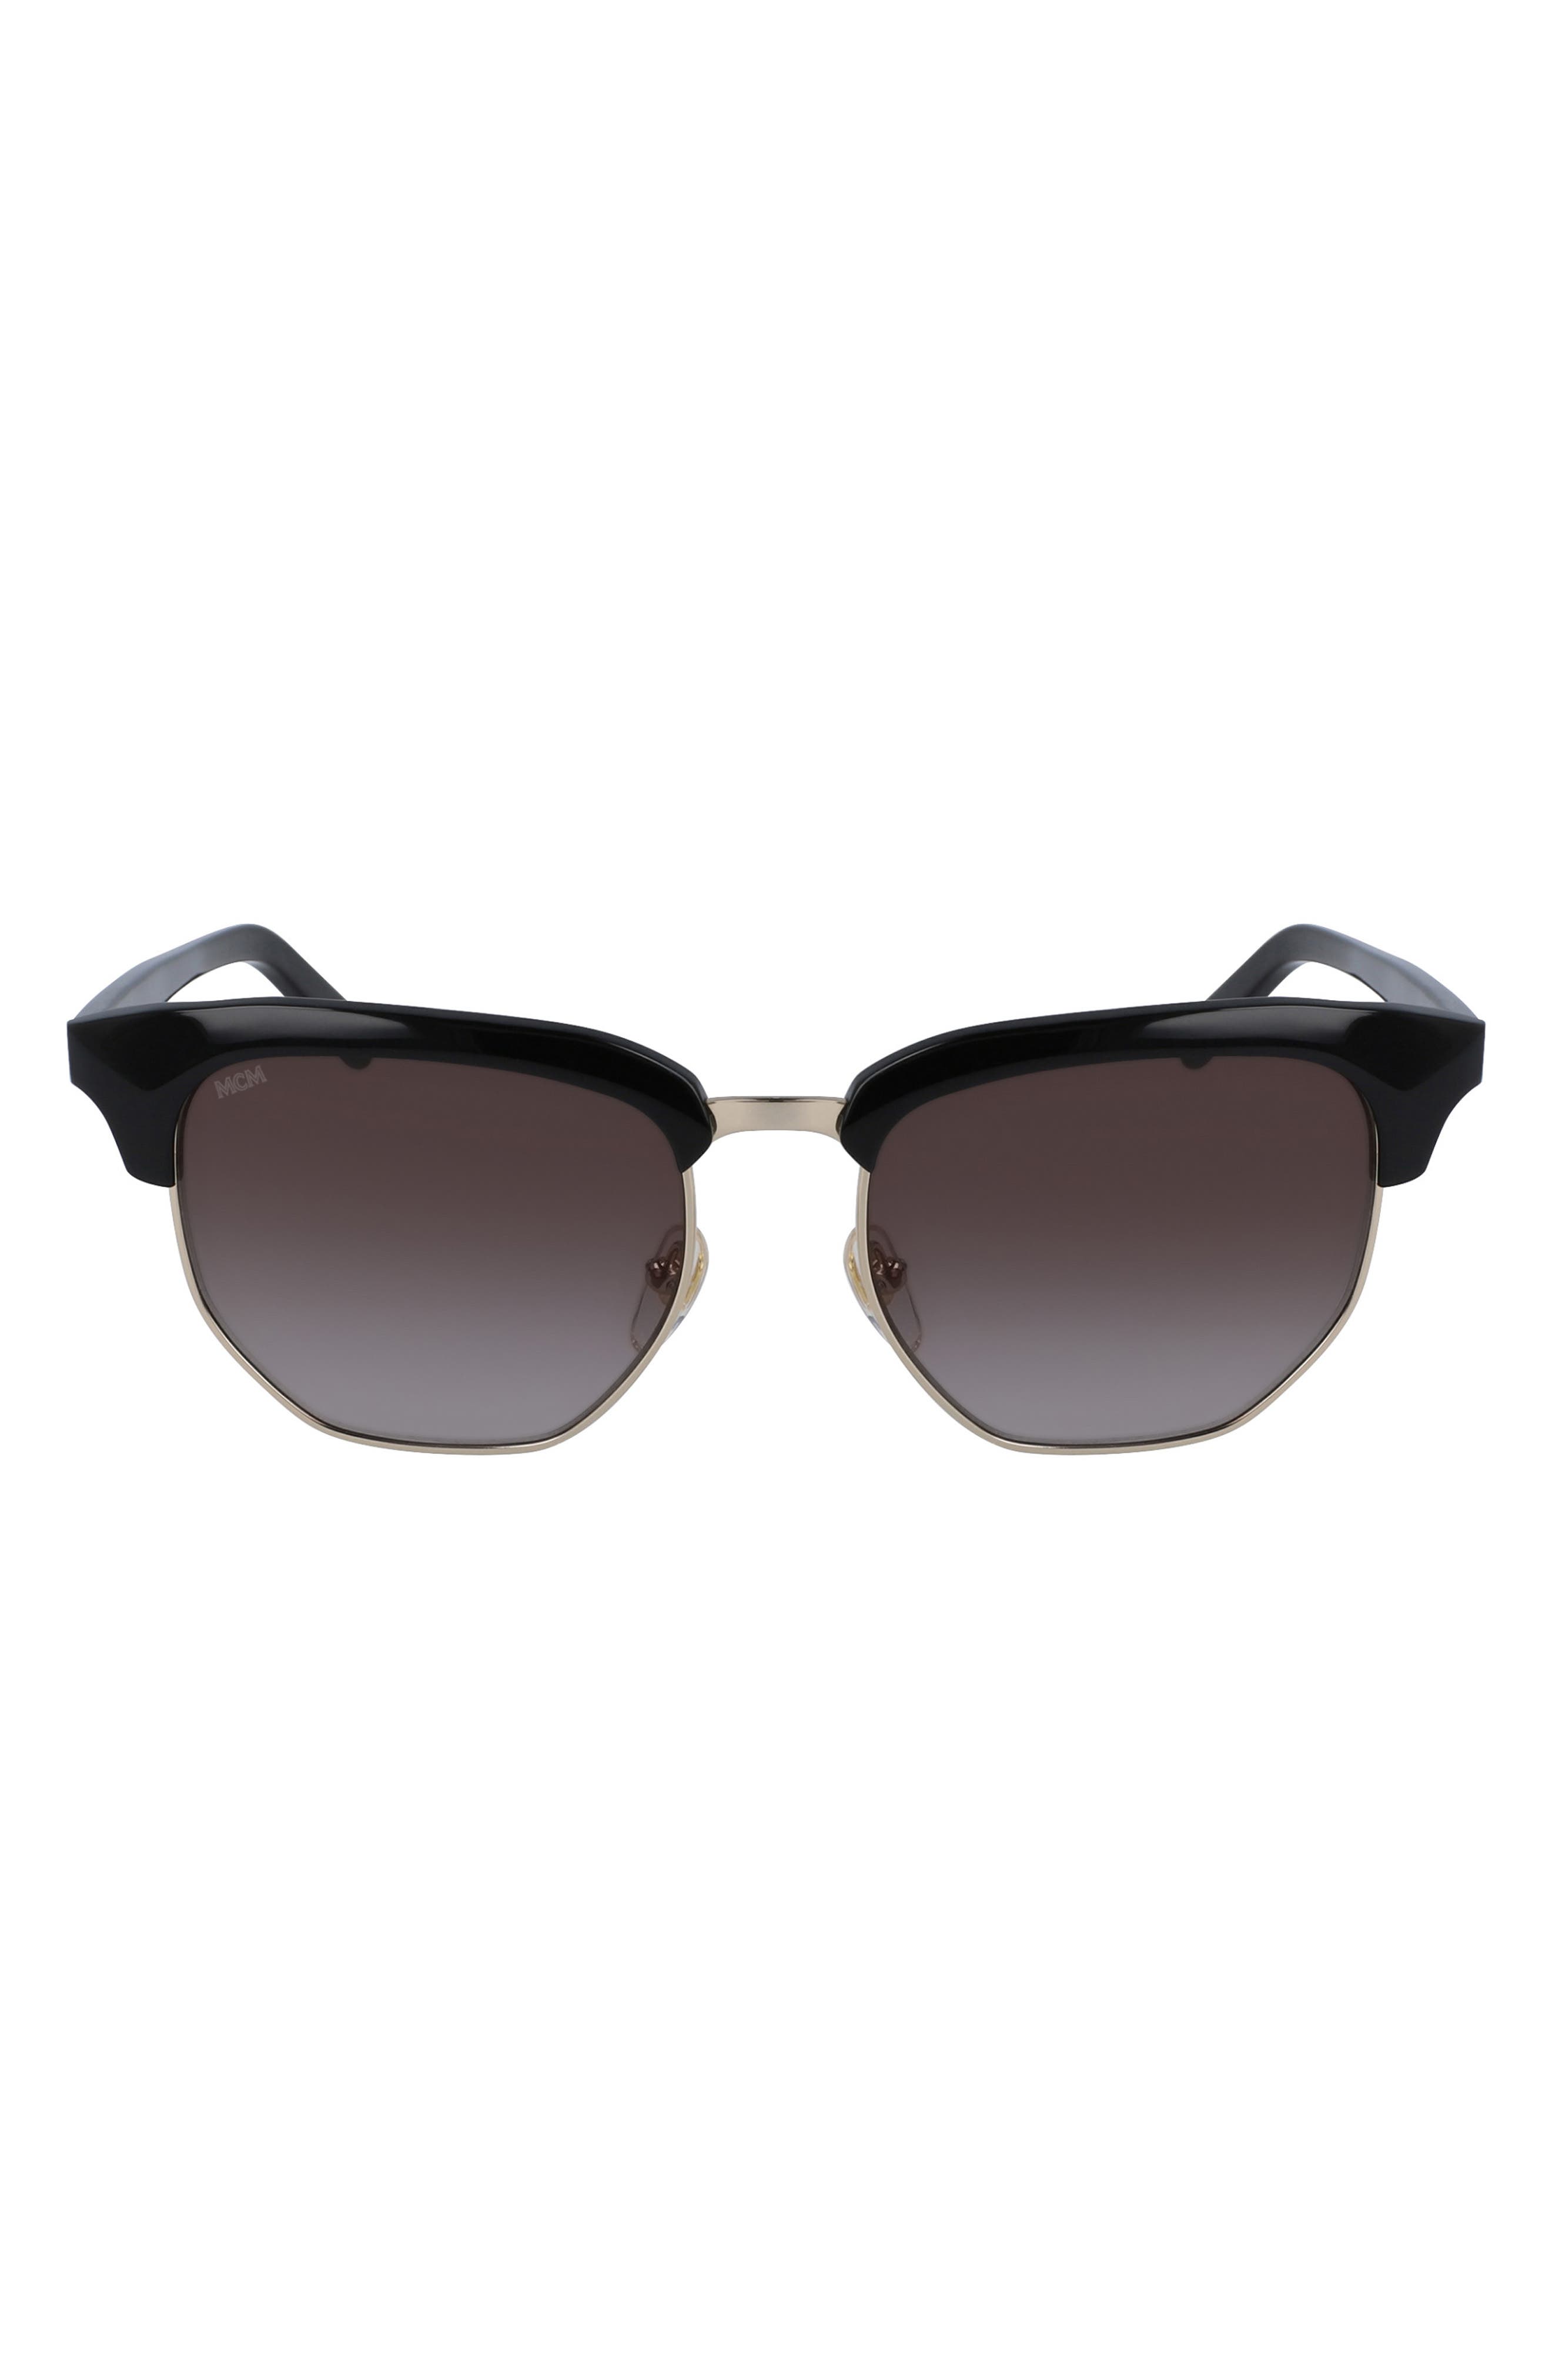 MCM 53mm Gradient Metal Sunglasses in Black/Khaki Gradient at Nordstrom